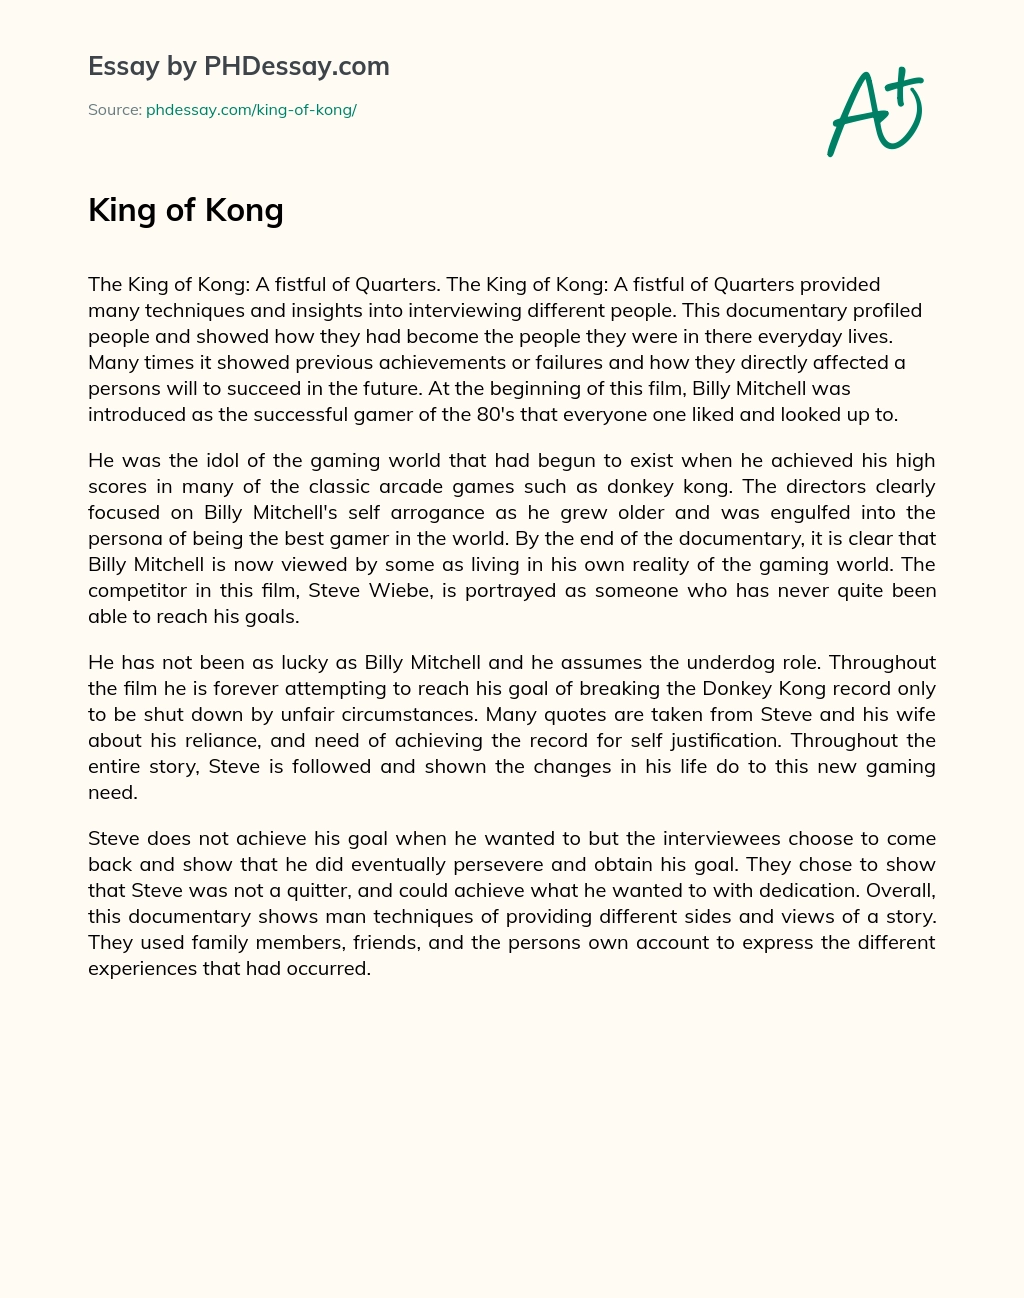 King of Kong essay